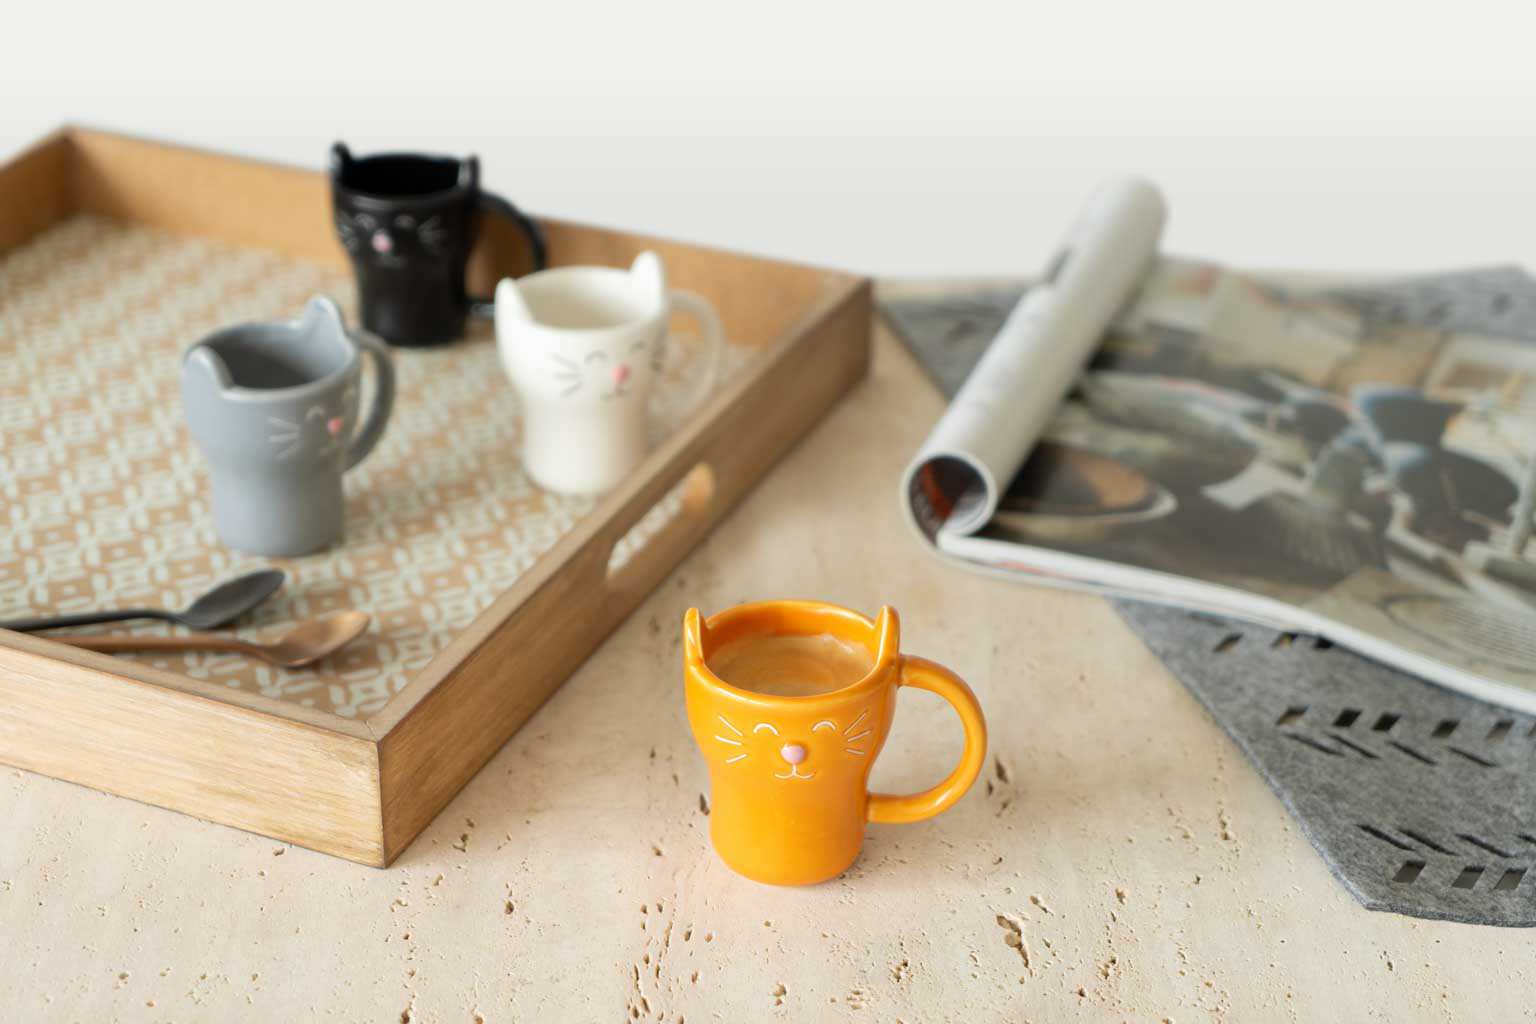 Coffee Cup Mug Cat Design Balvi Gadget